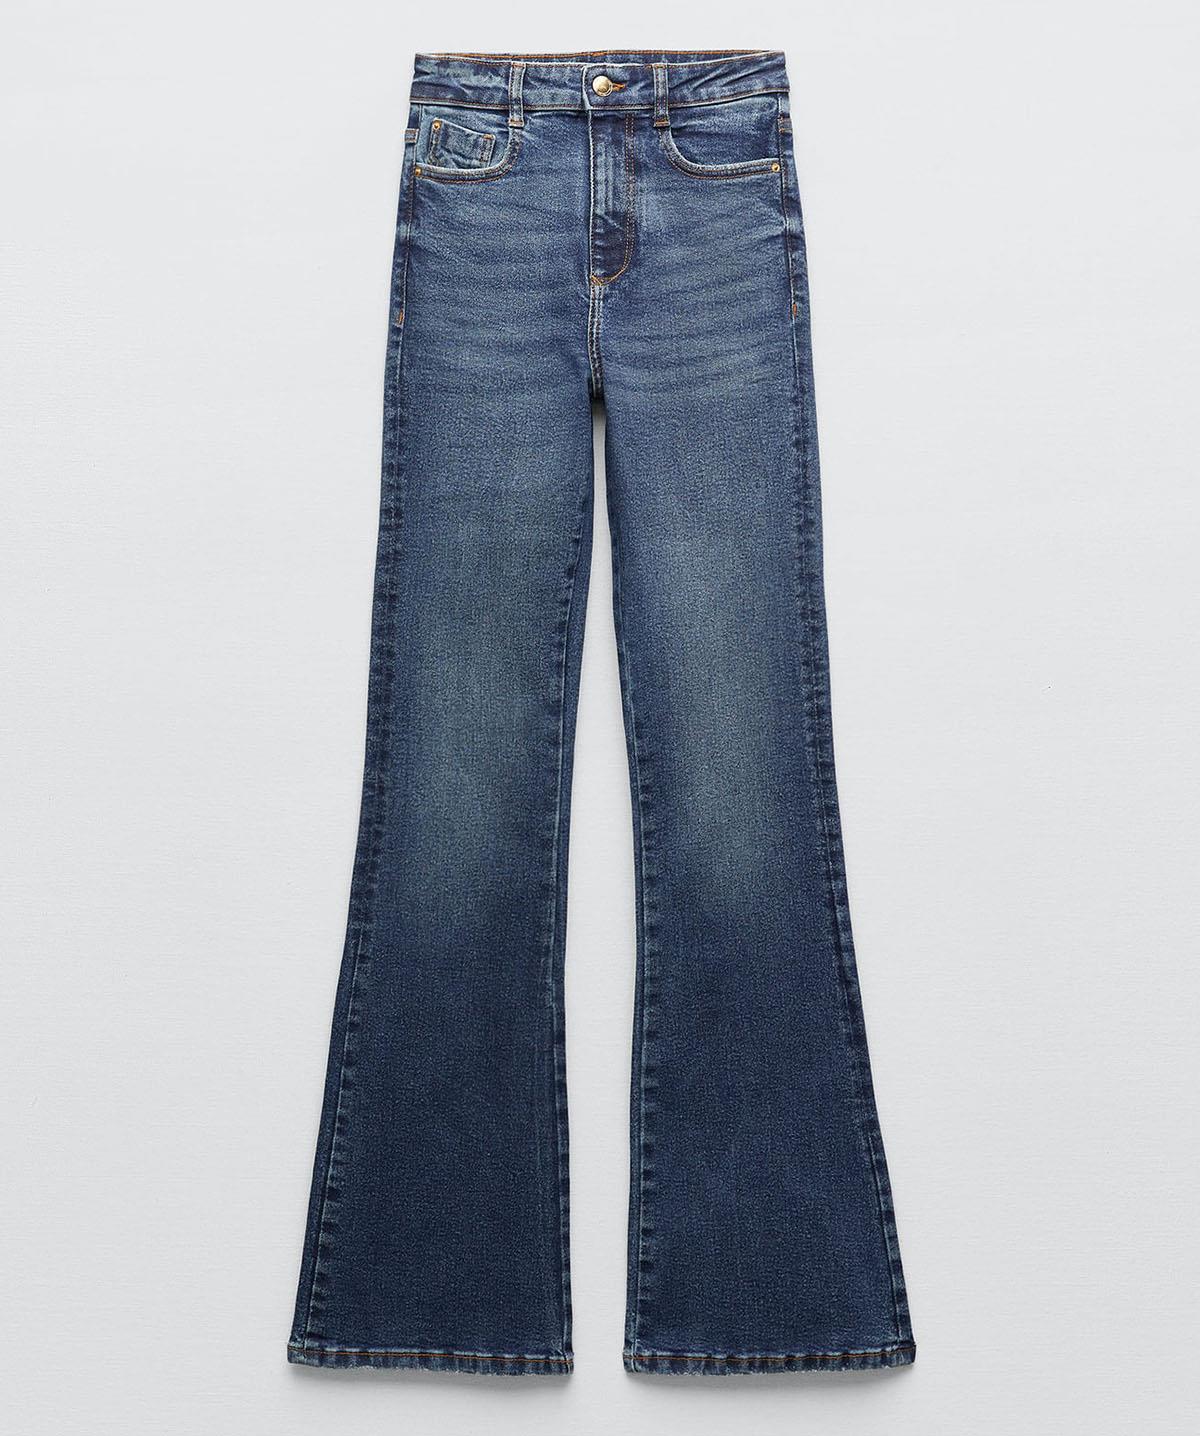 Jeans Zara. Jeans campana, de Zara